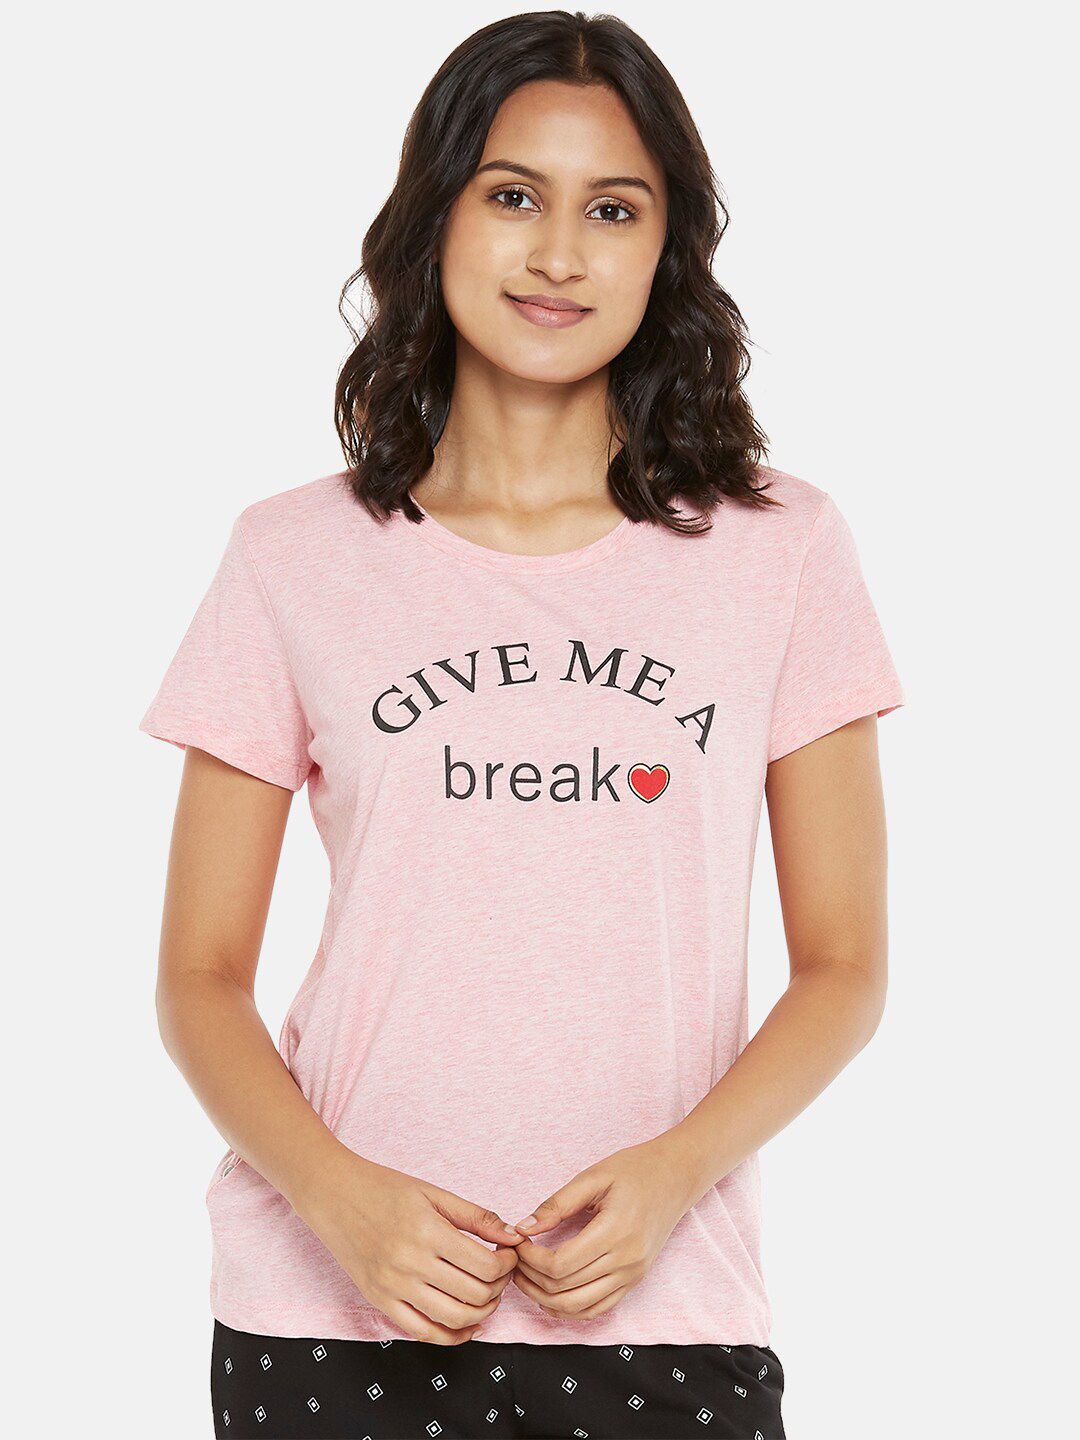 Dreamz by Pantaloons Pink & Black Printed Regular Lounge tshirt Price in India